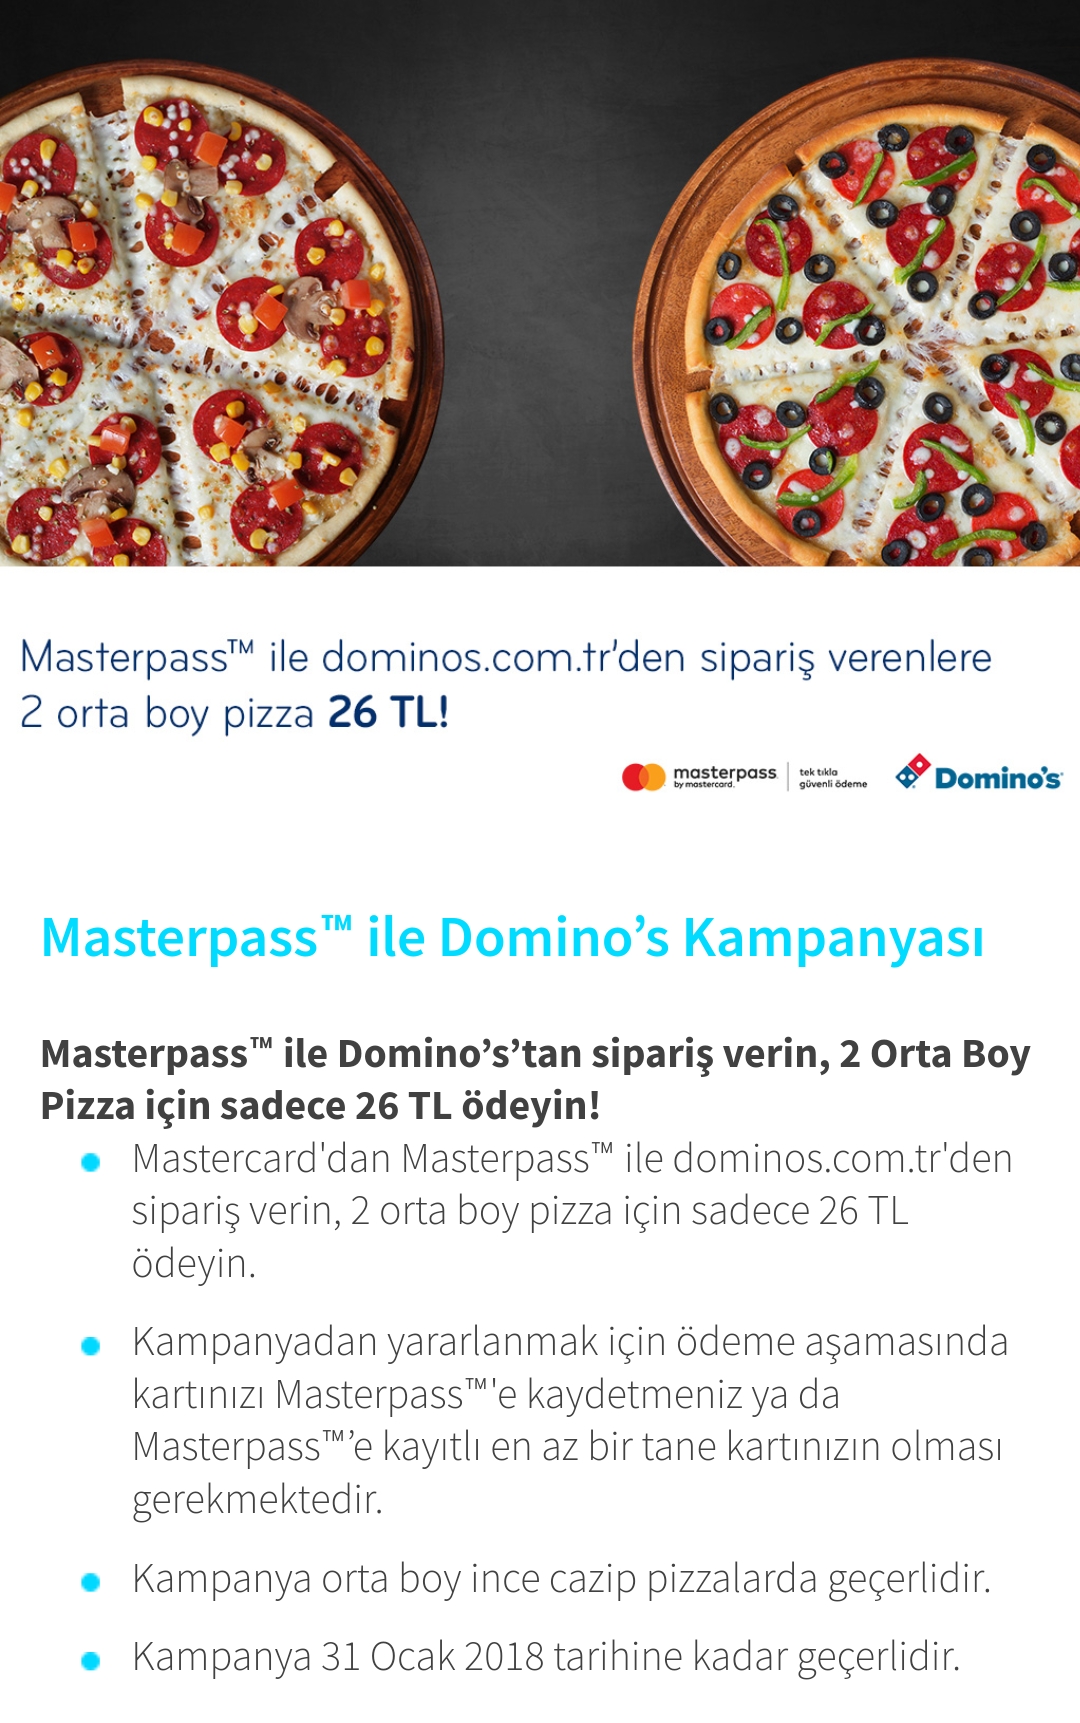 Masterpass ile Dominos'ta 2 Orta Boy Pizza 26tl » Sayfa 1 1